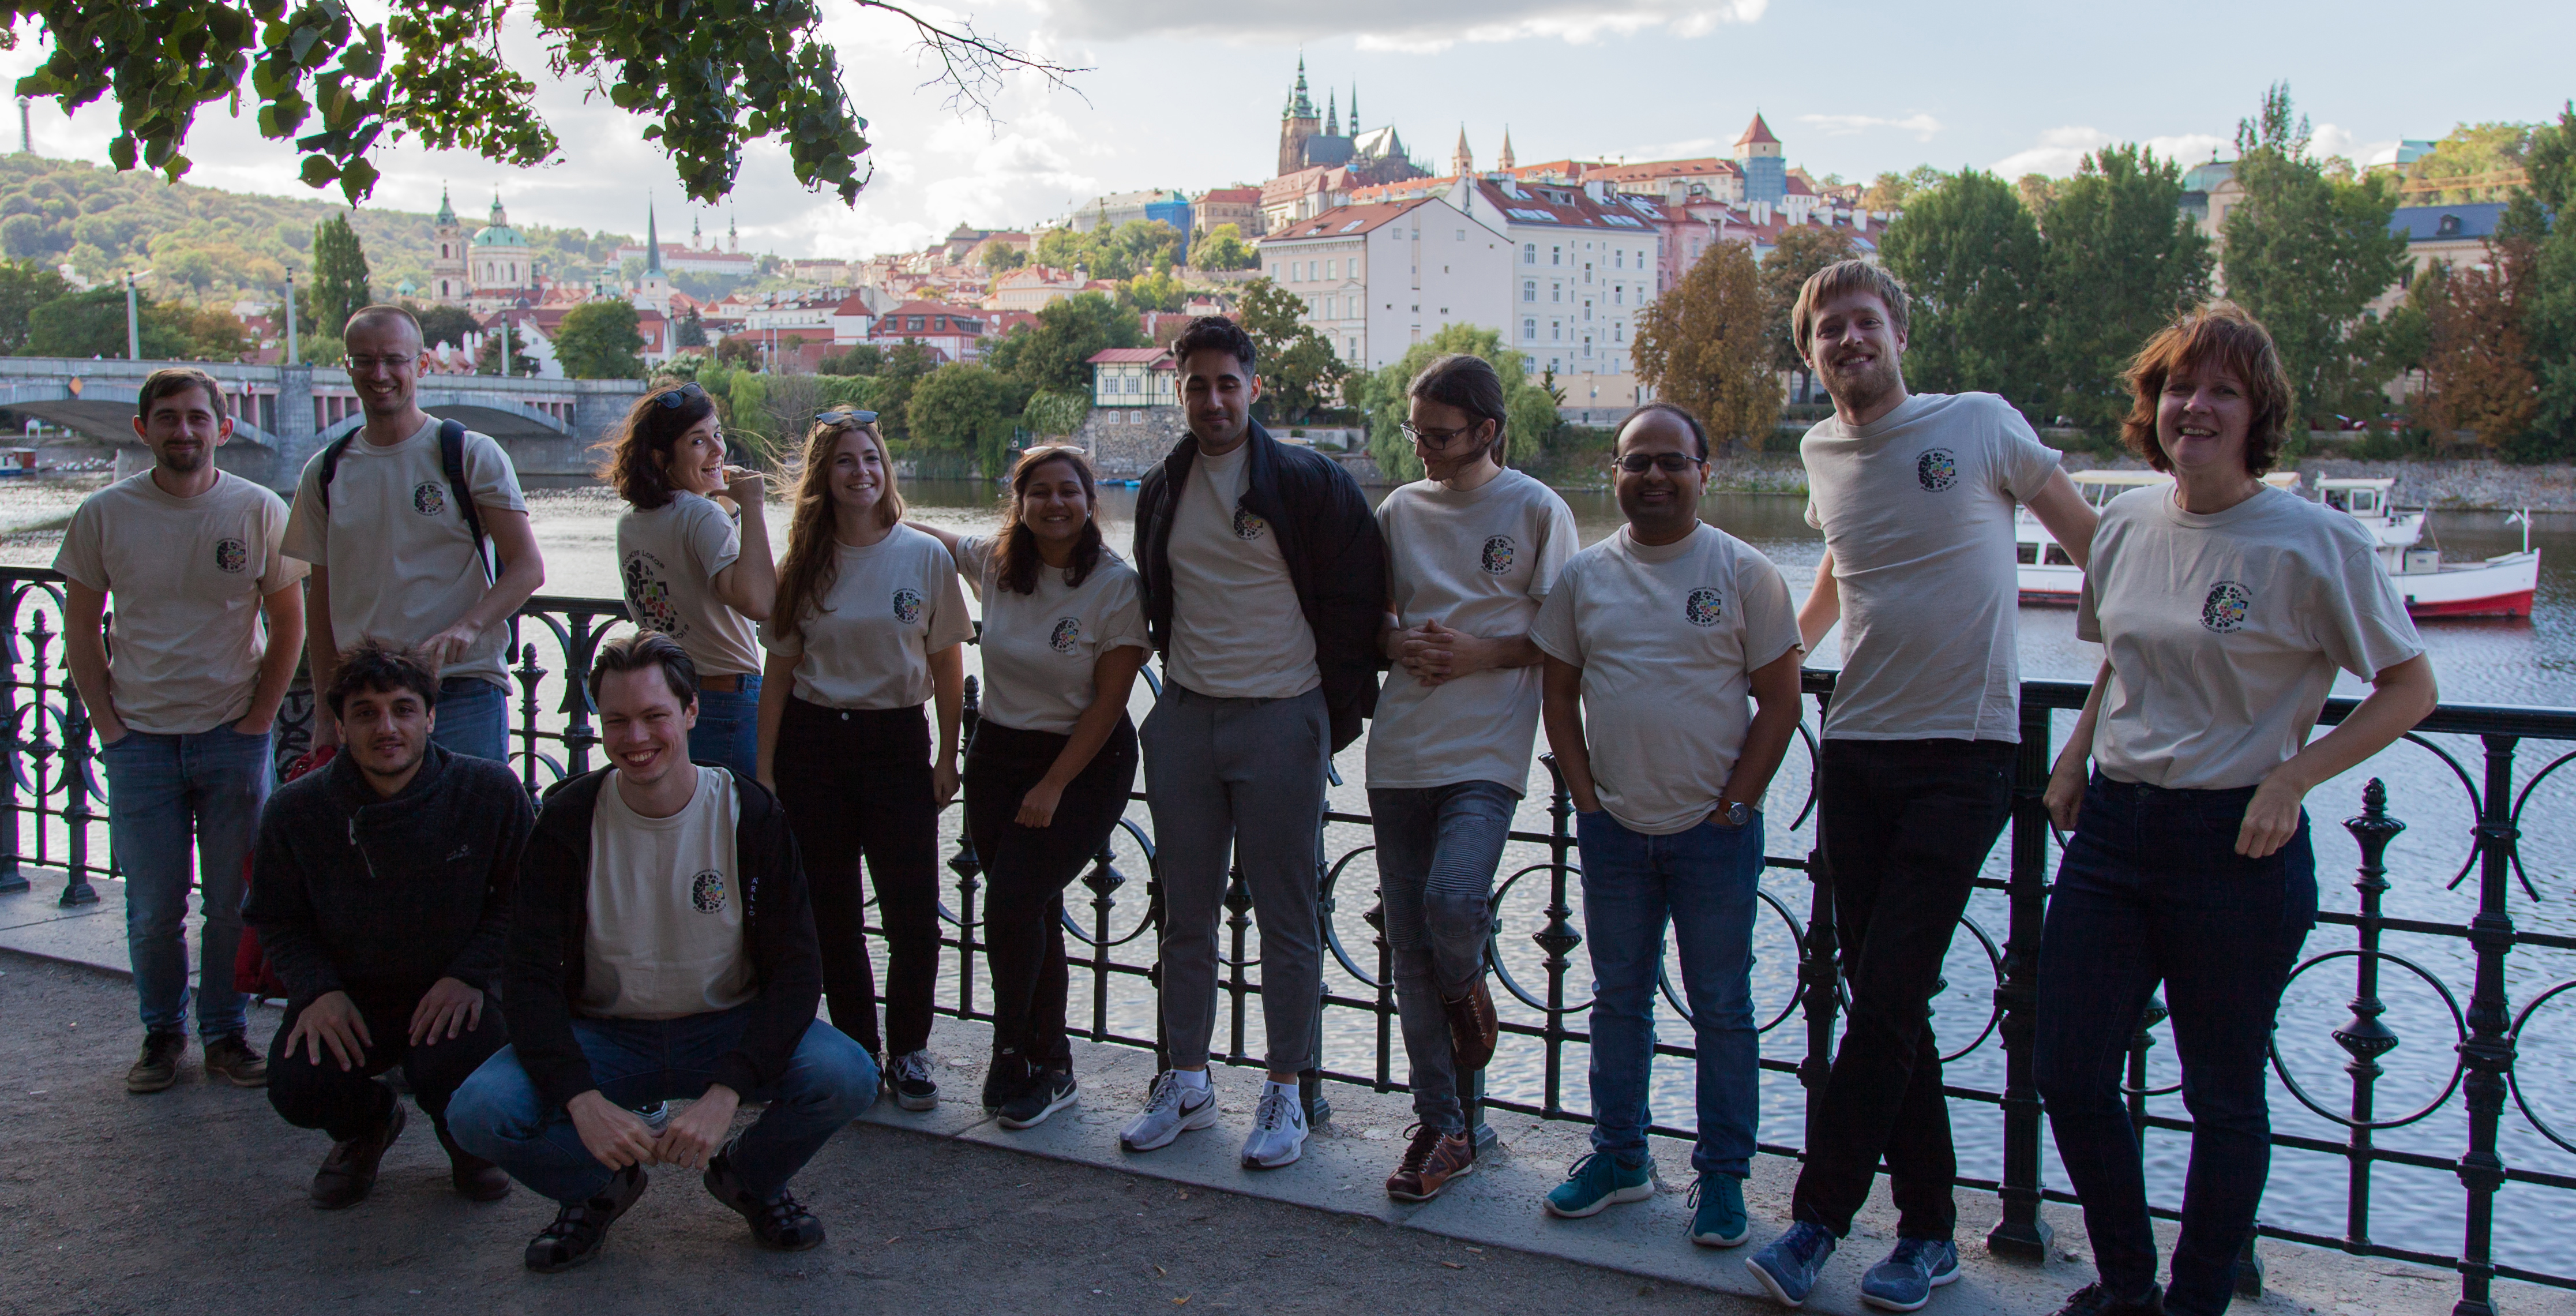 Khodosevich Group in Prague 2019